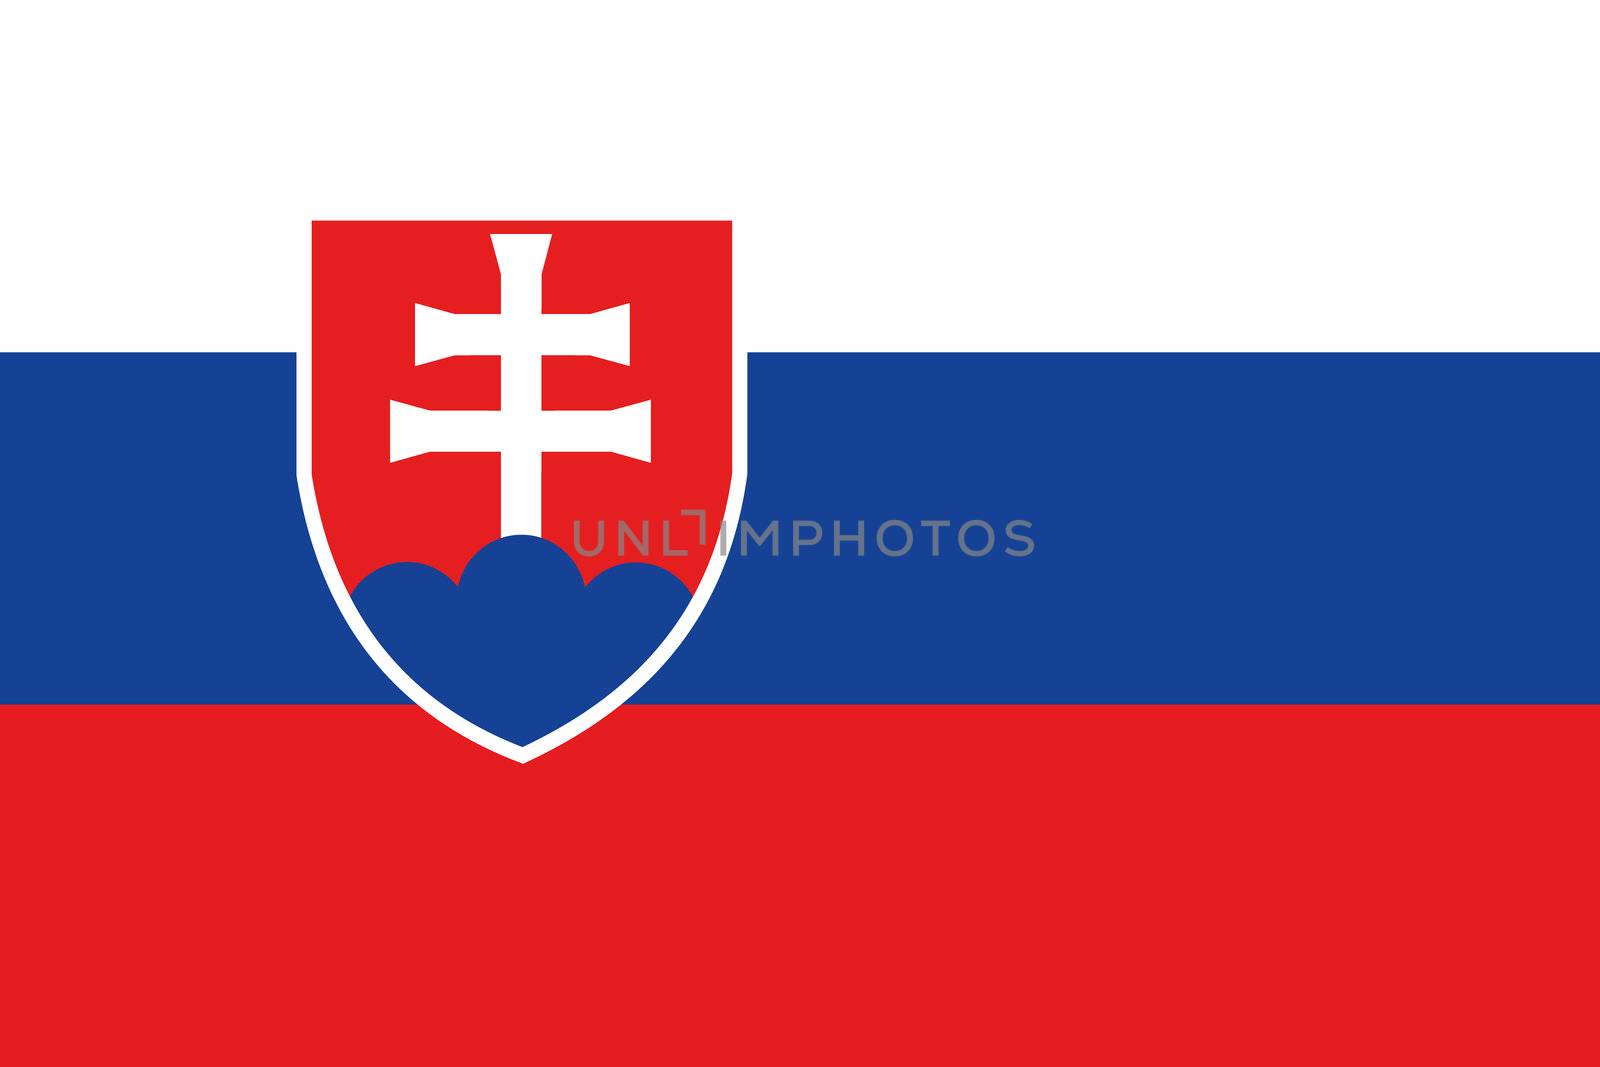 An illustration of the flag of Slovakia